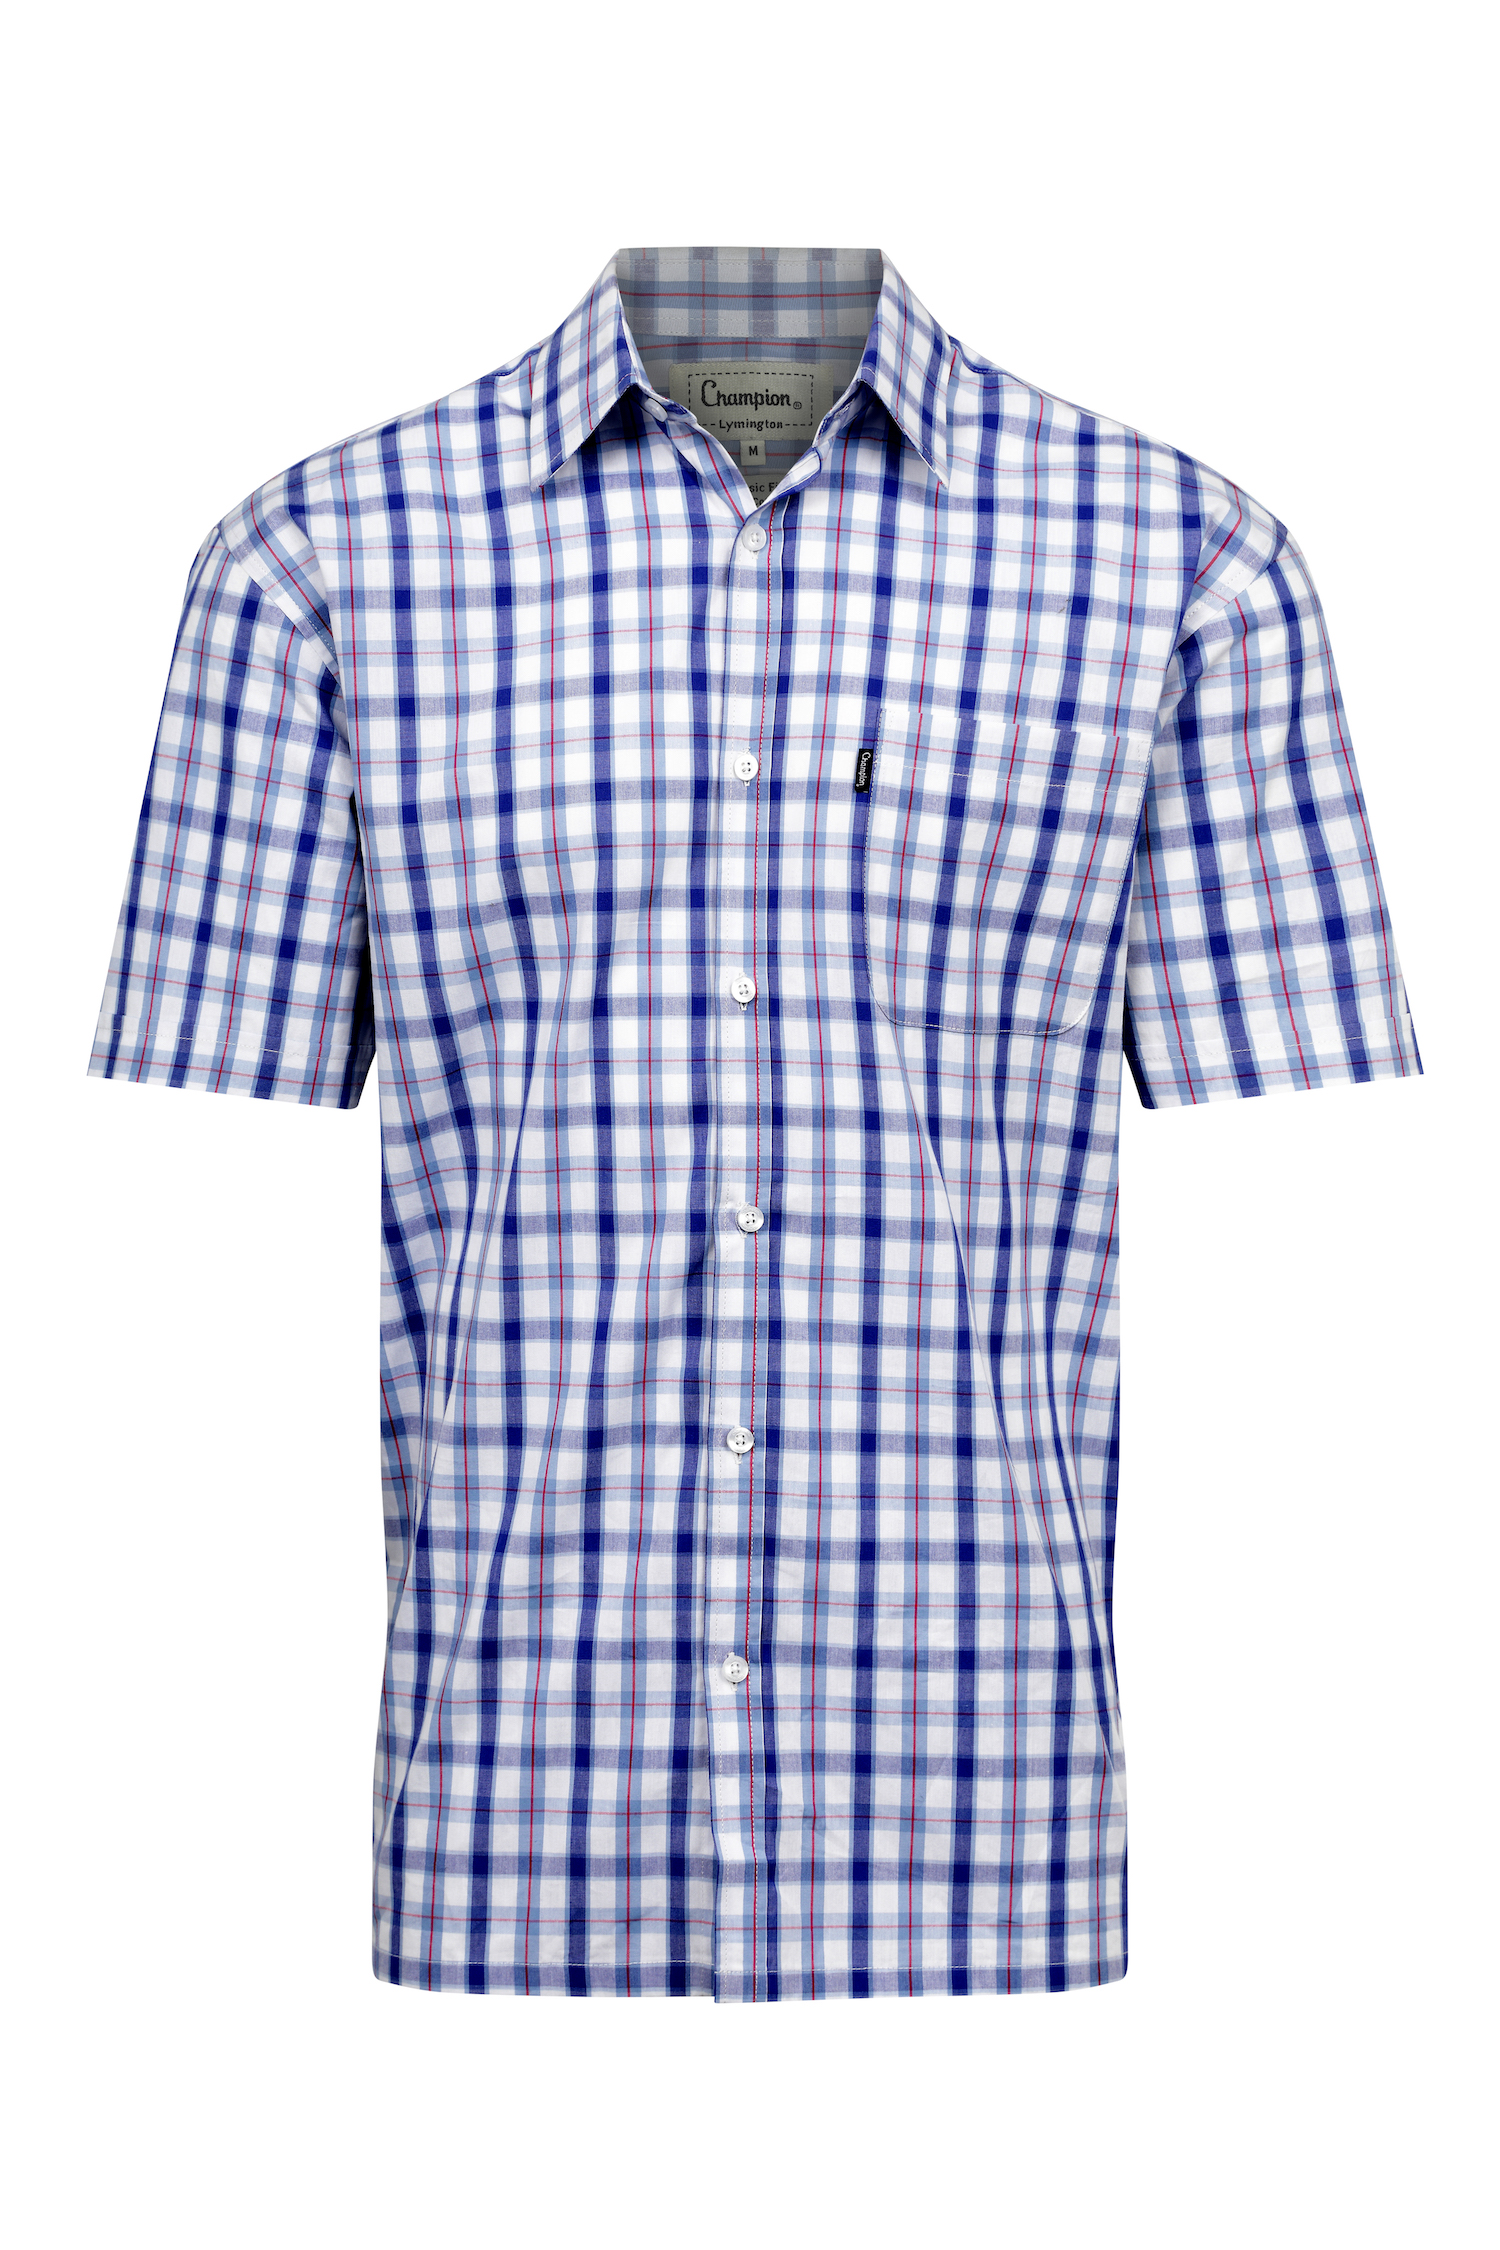 Champion Lymington Short Sleeve Shirt Blue - Edinburgh Outdoor Wear